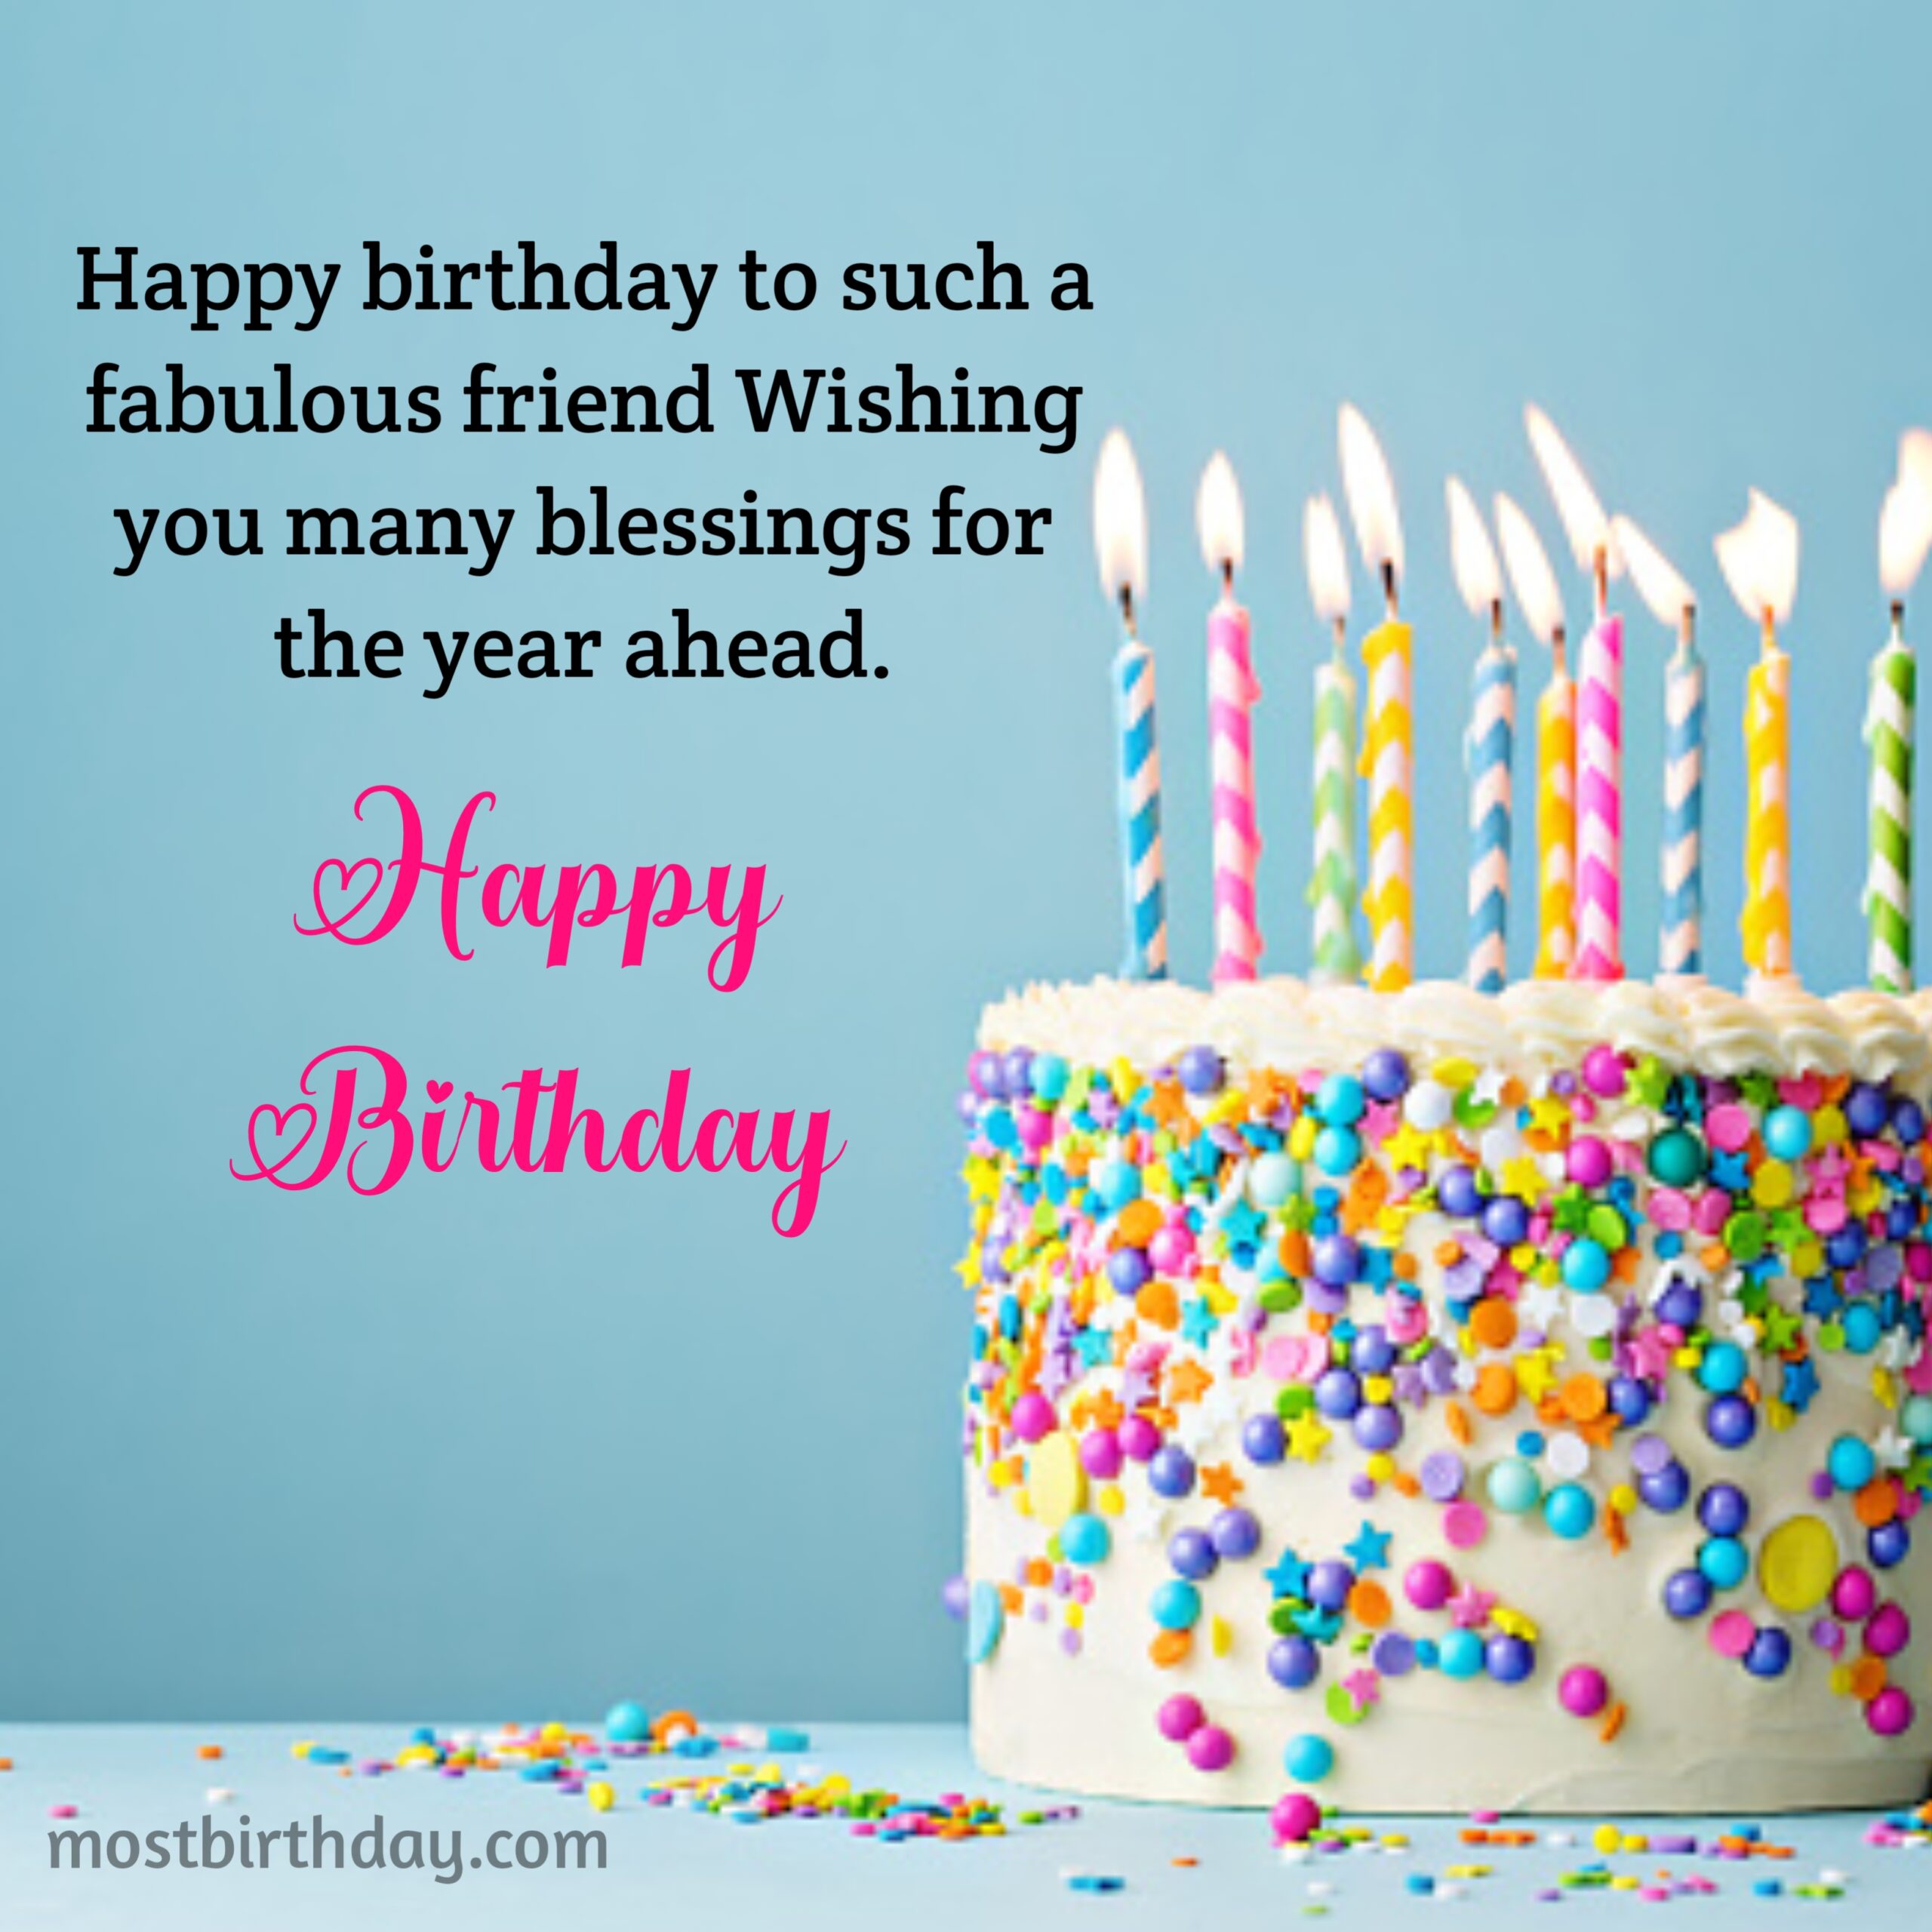 Celebrating Your Special Day, Friend: Happy Birthday - mostbirthday